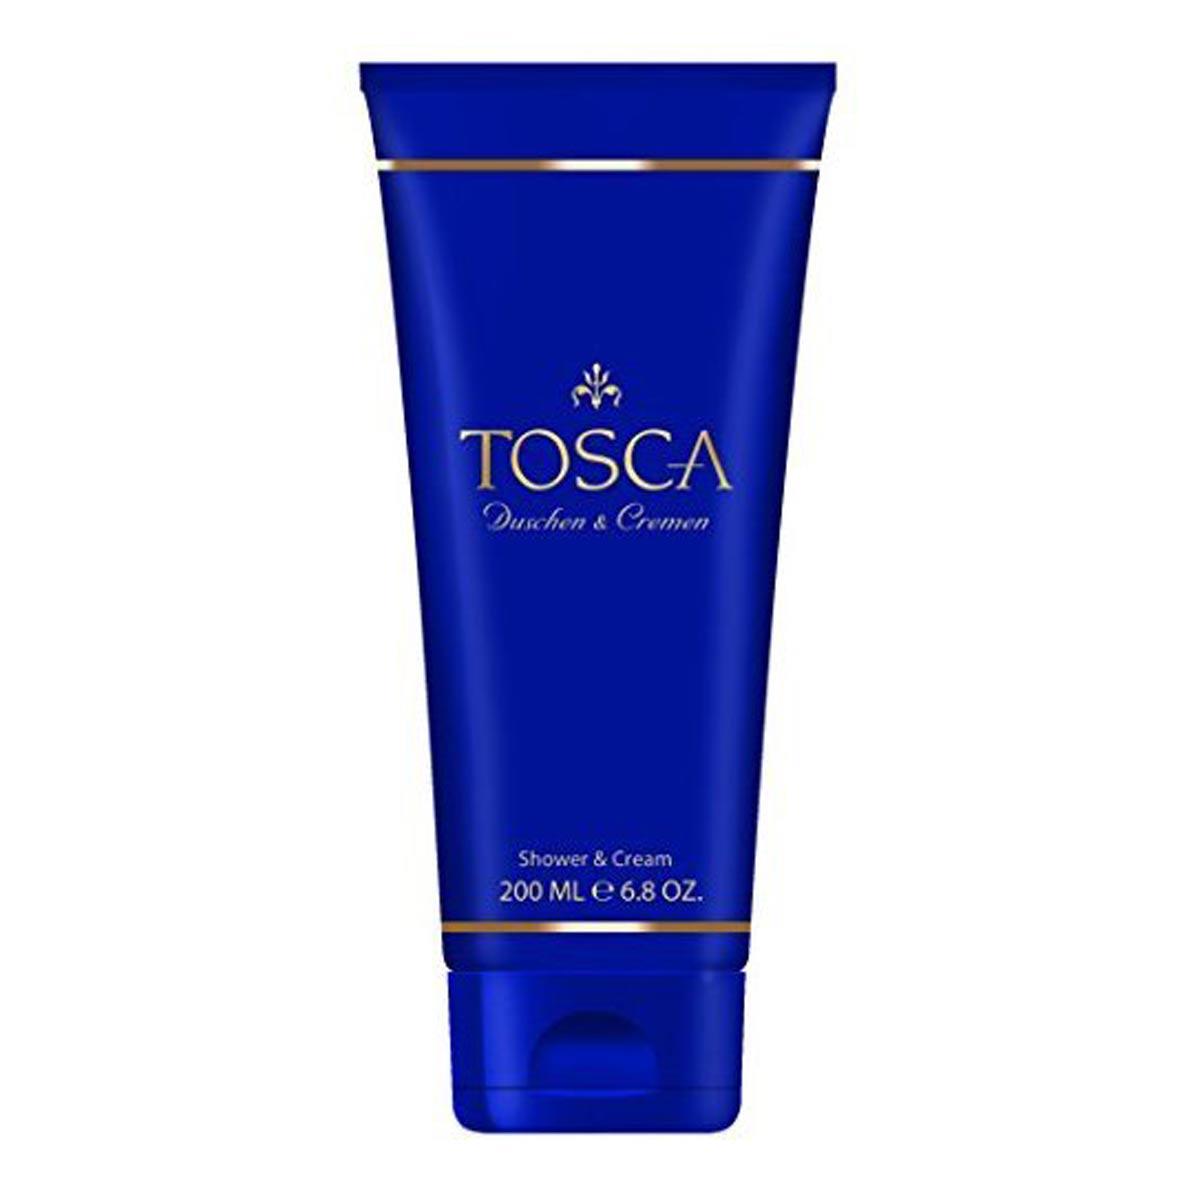 Primary image of Tosca Shower Cream